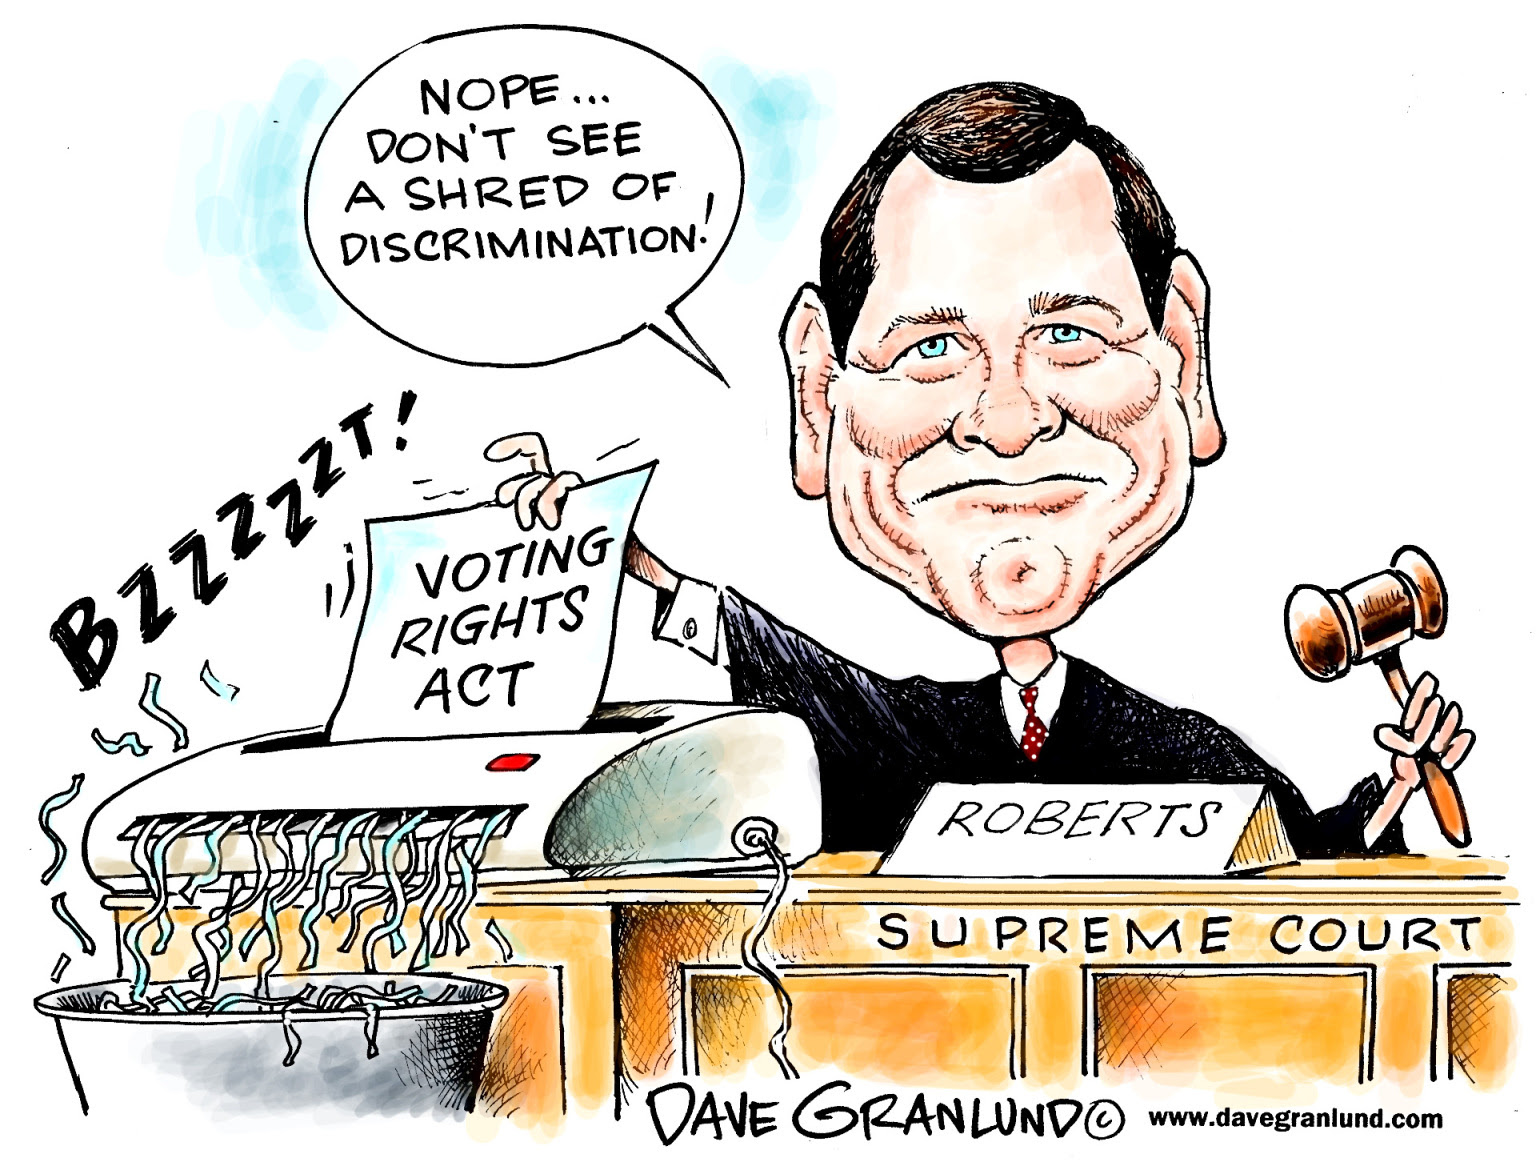 Roberts guts voting right act SCOTUS